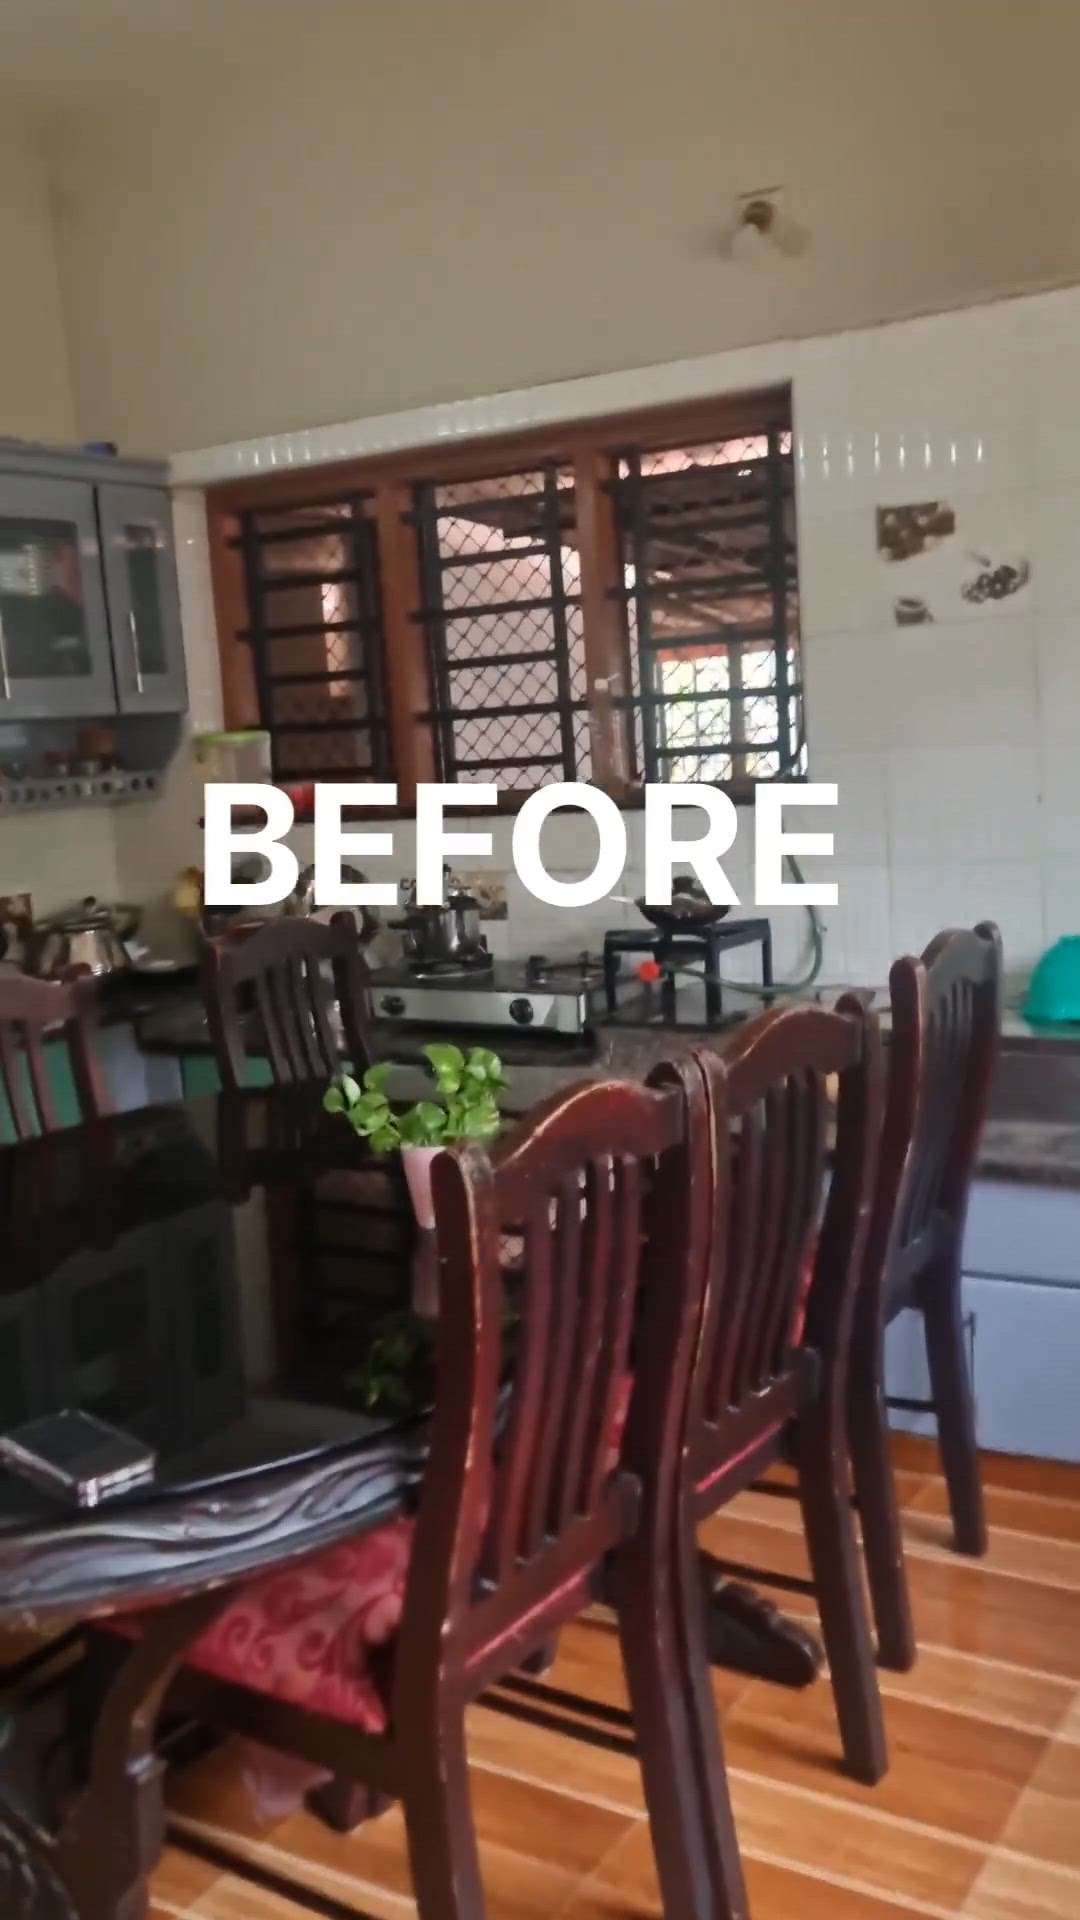 Renovation work before and after
#tips
#beforeandafter 
#KitchenRenovation  #KeralaStyleHouse